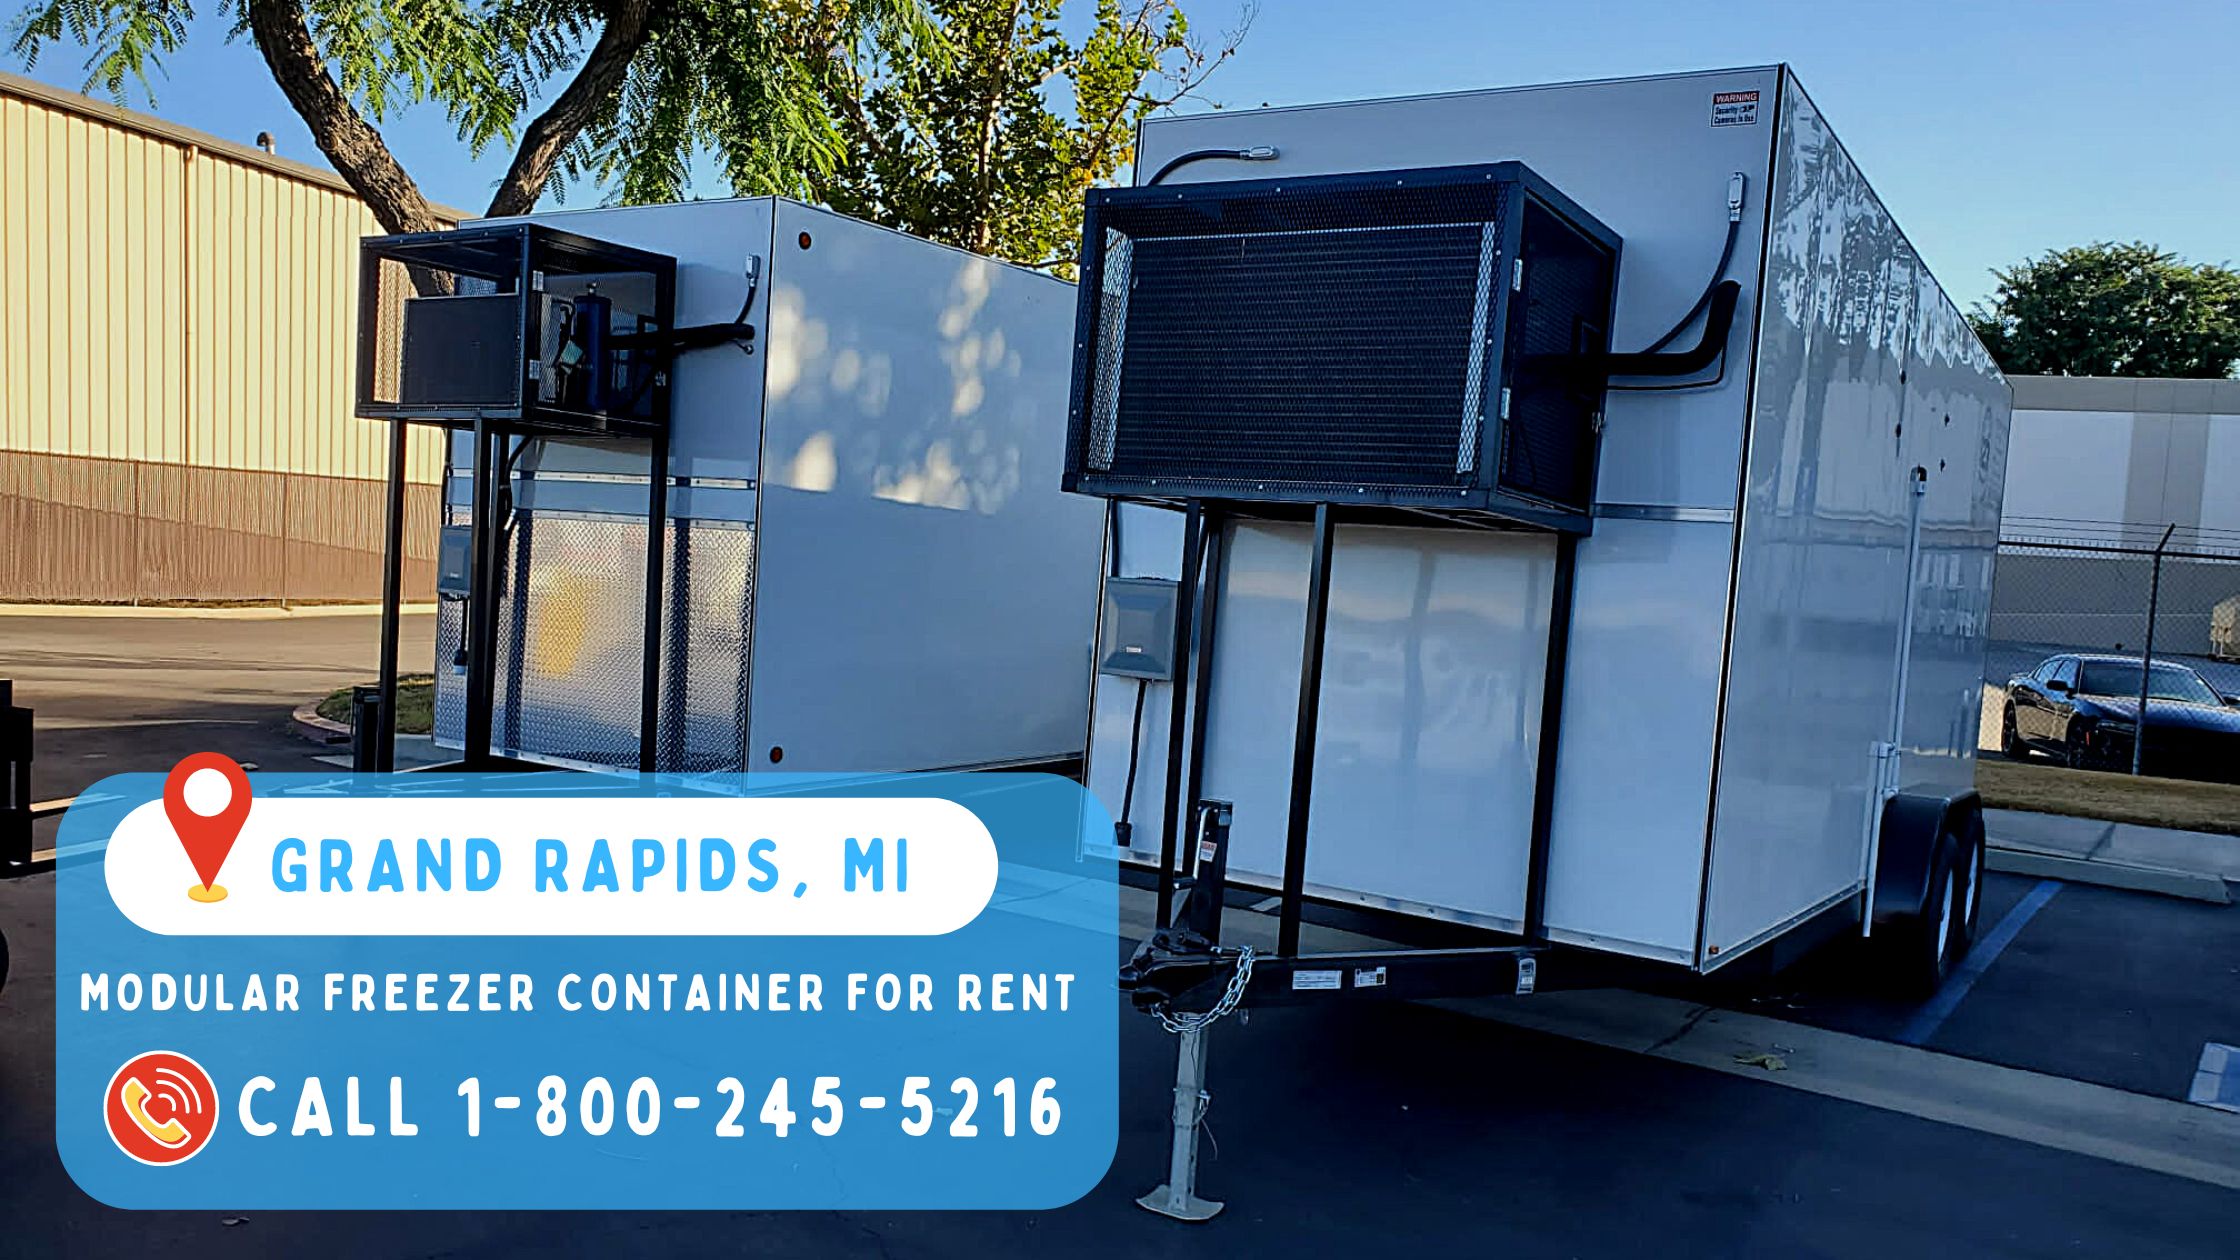 Modular freezer container for rent in Grand Rapids, MI